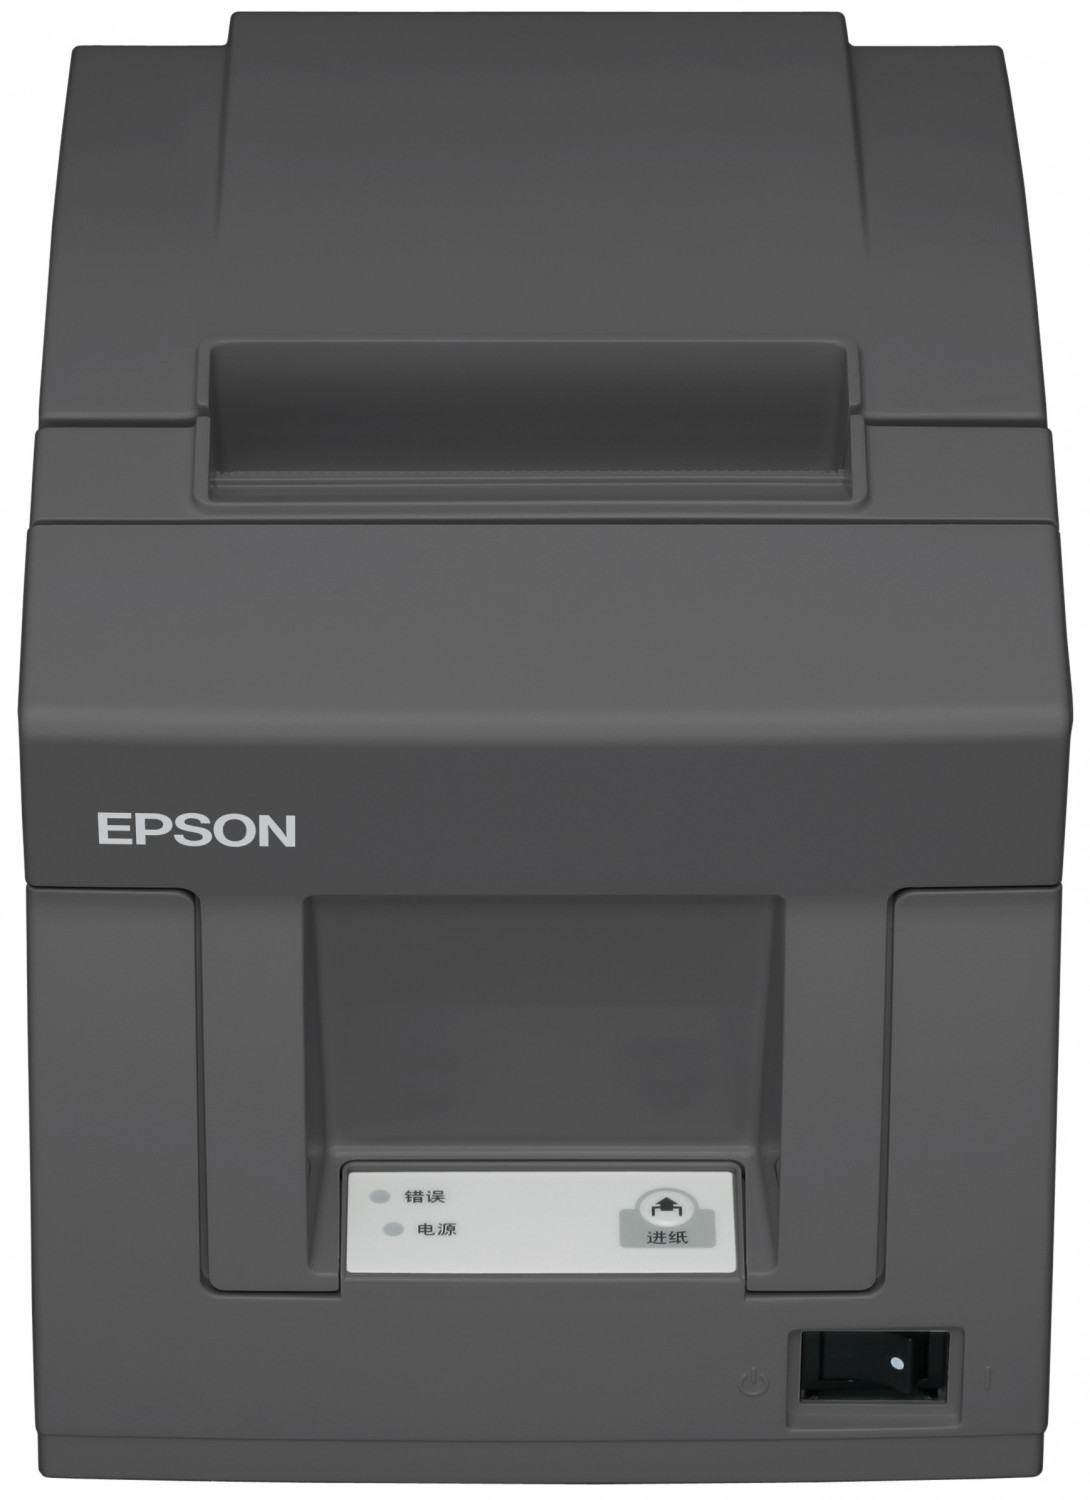 Epson printer tm t81 .inf file free download windows 10